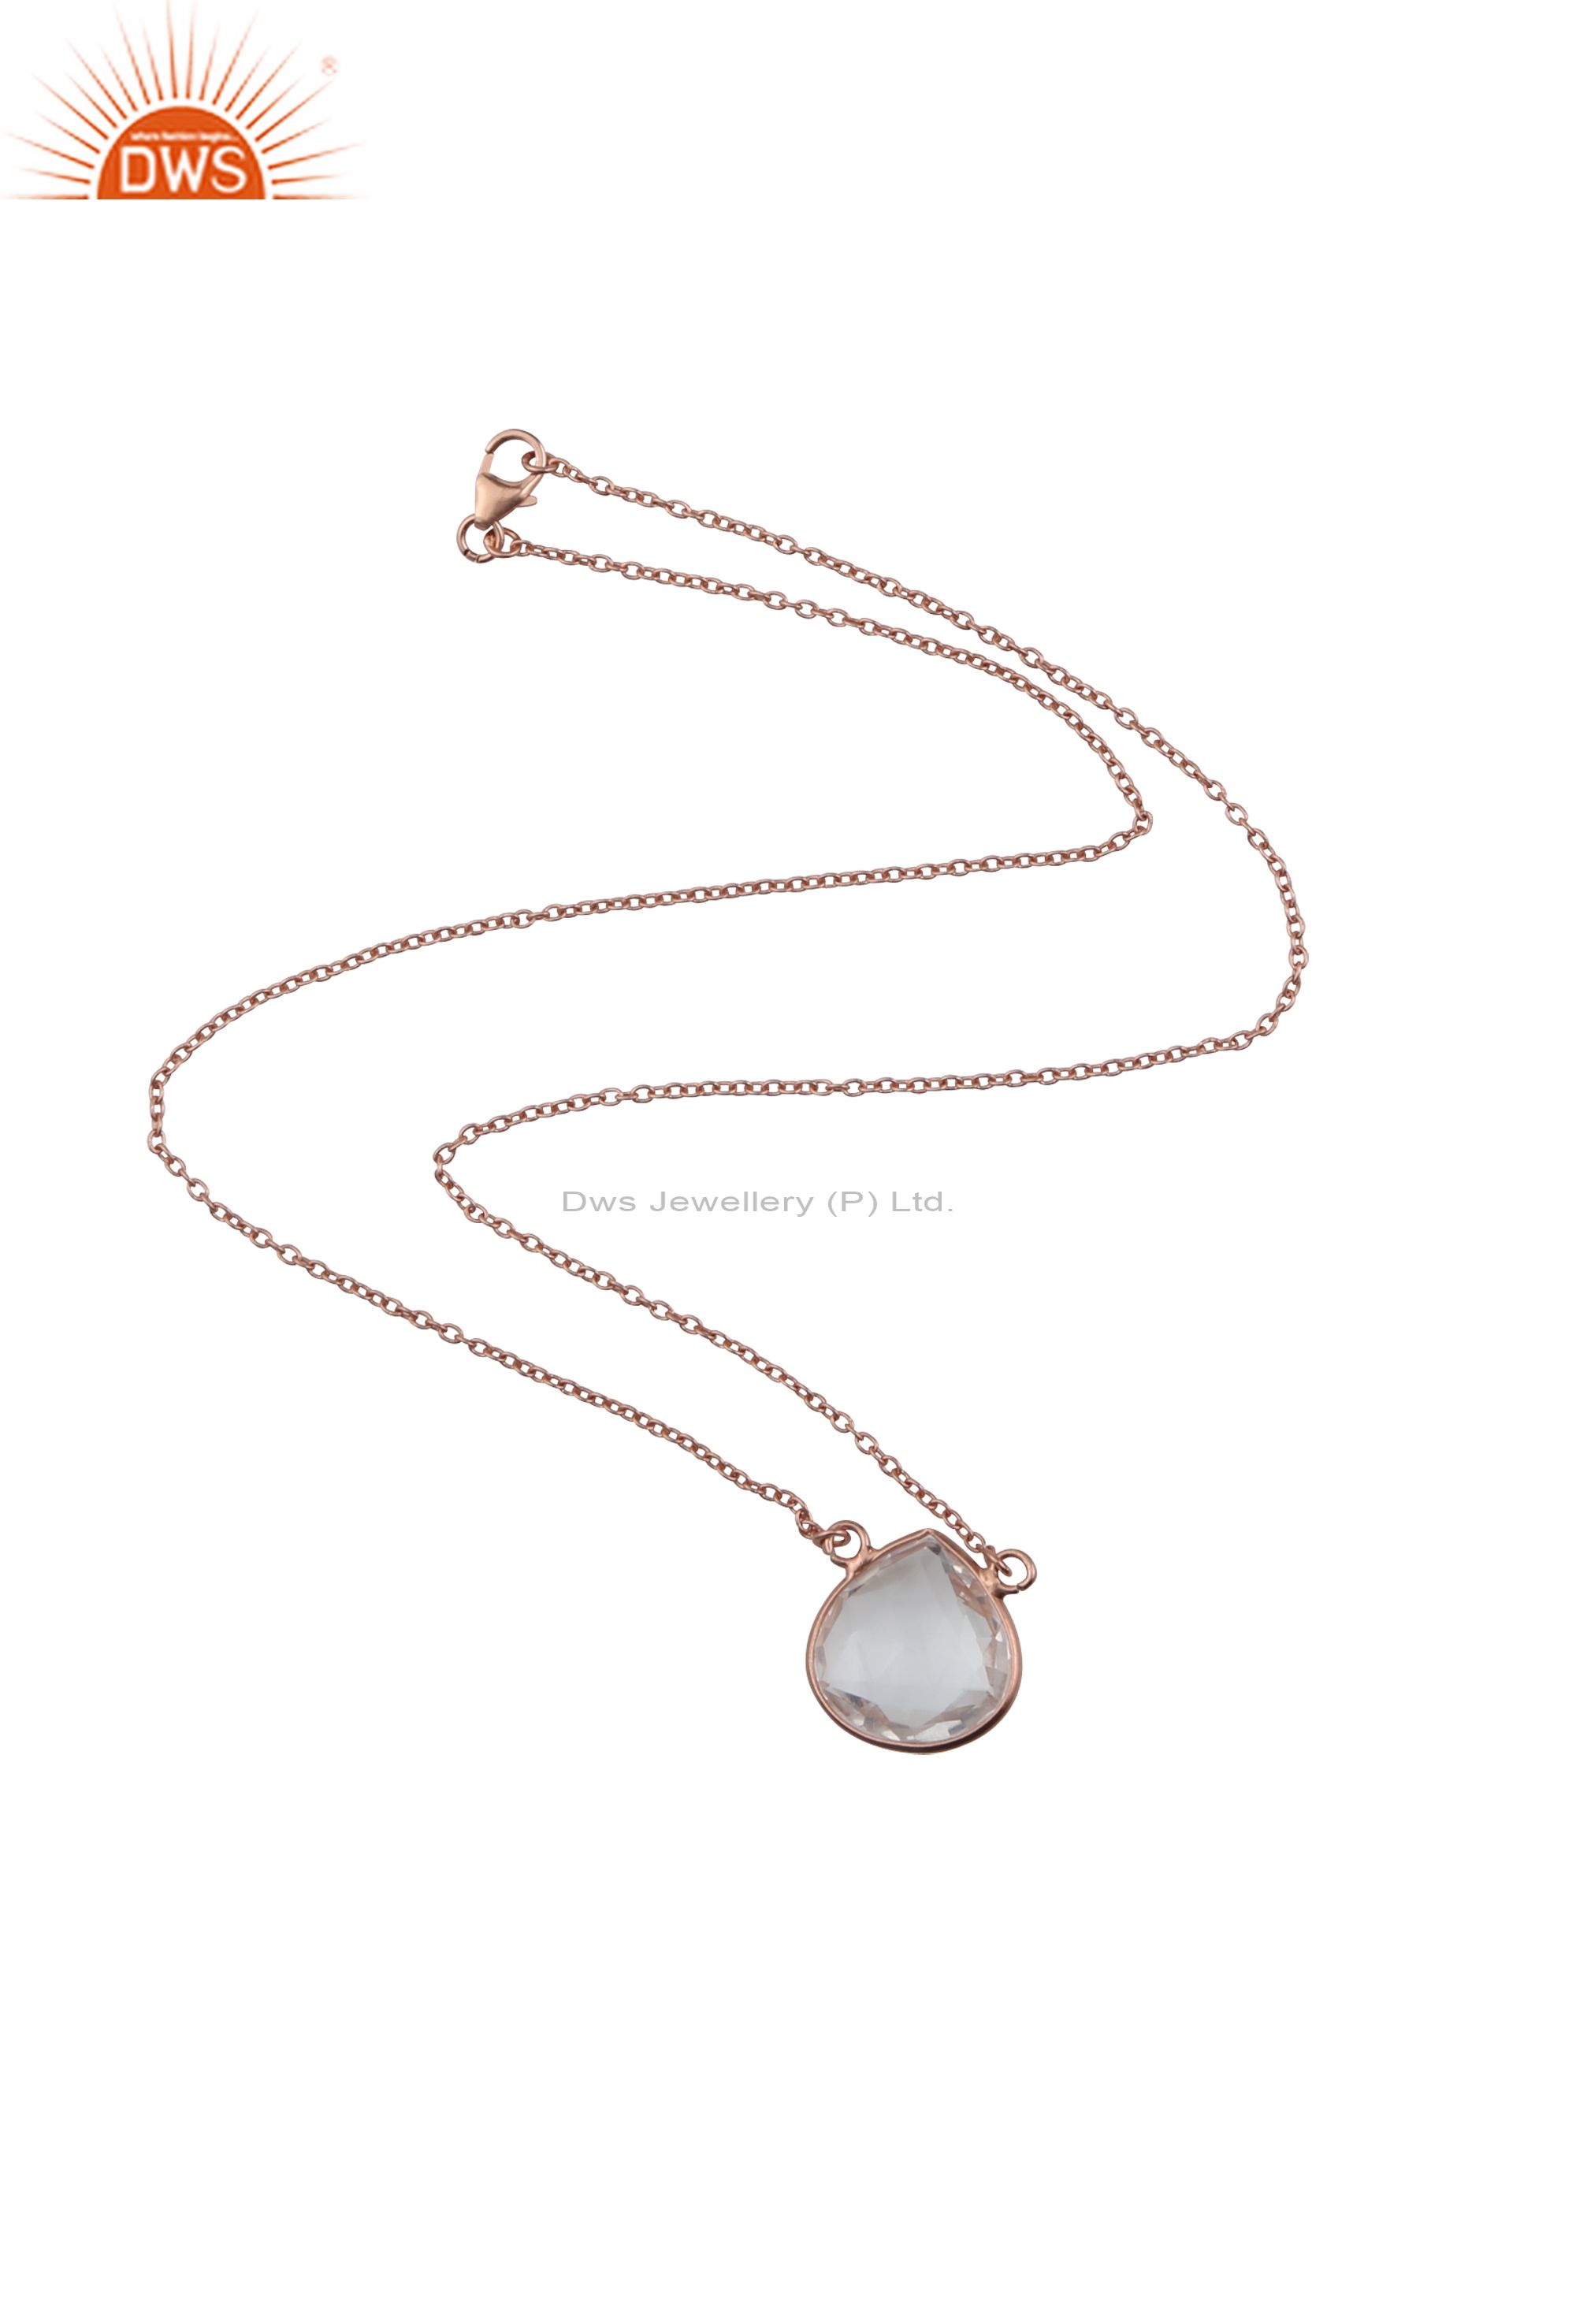 18k rose gold plated sterling silver crystal quartz bezel set chain necklace